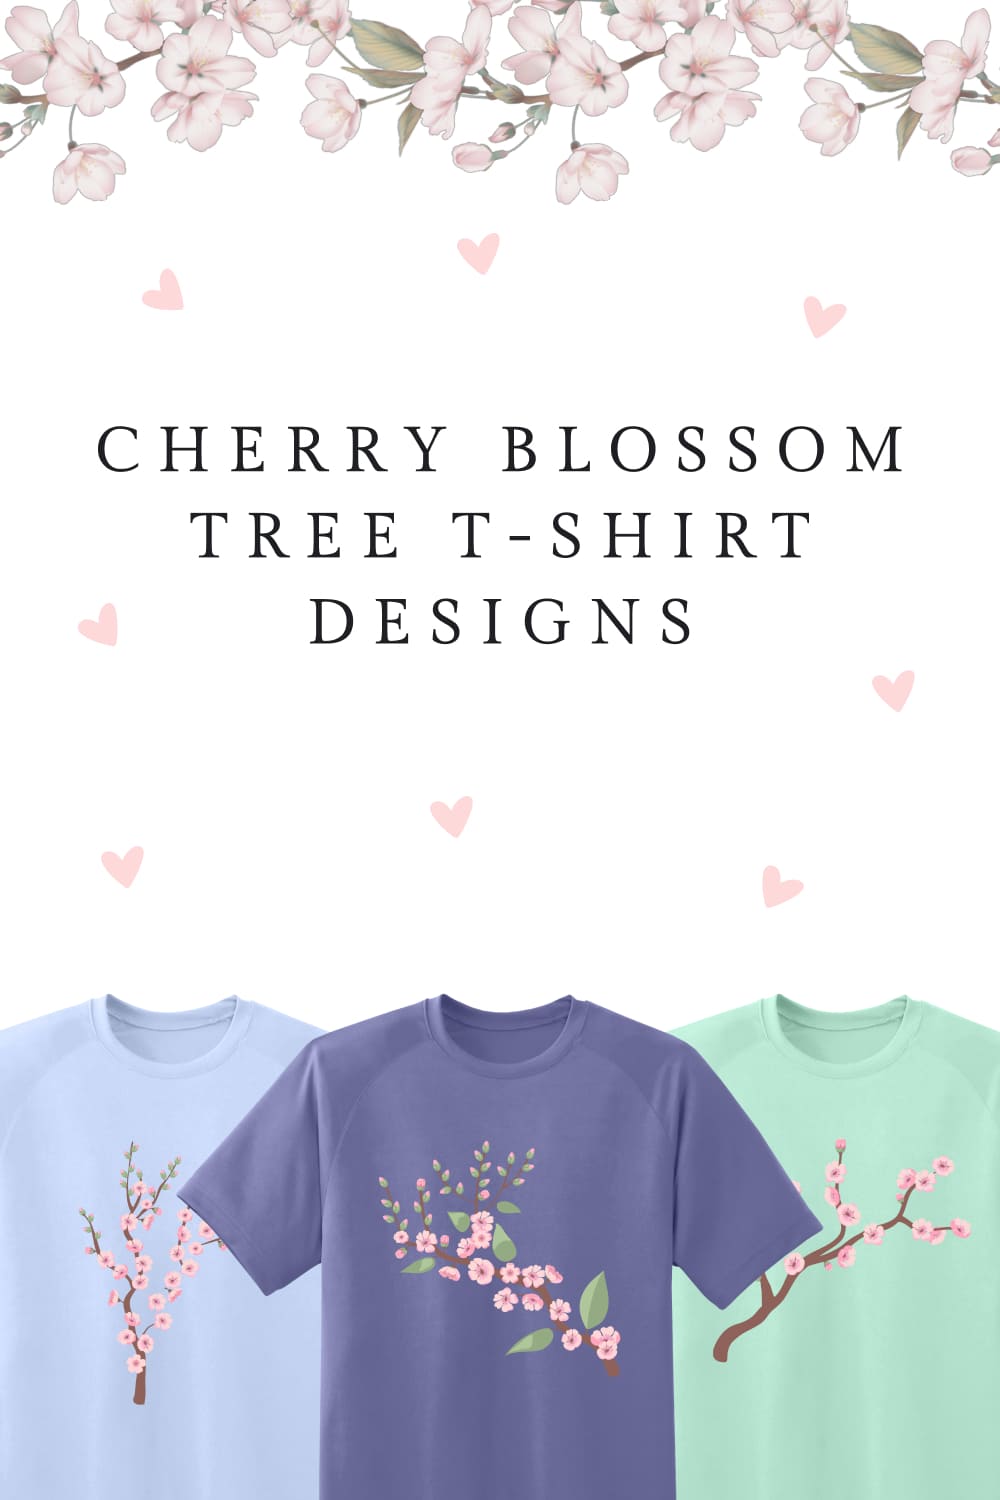 Cherry blossom tree t shirt designs images of pinterest.